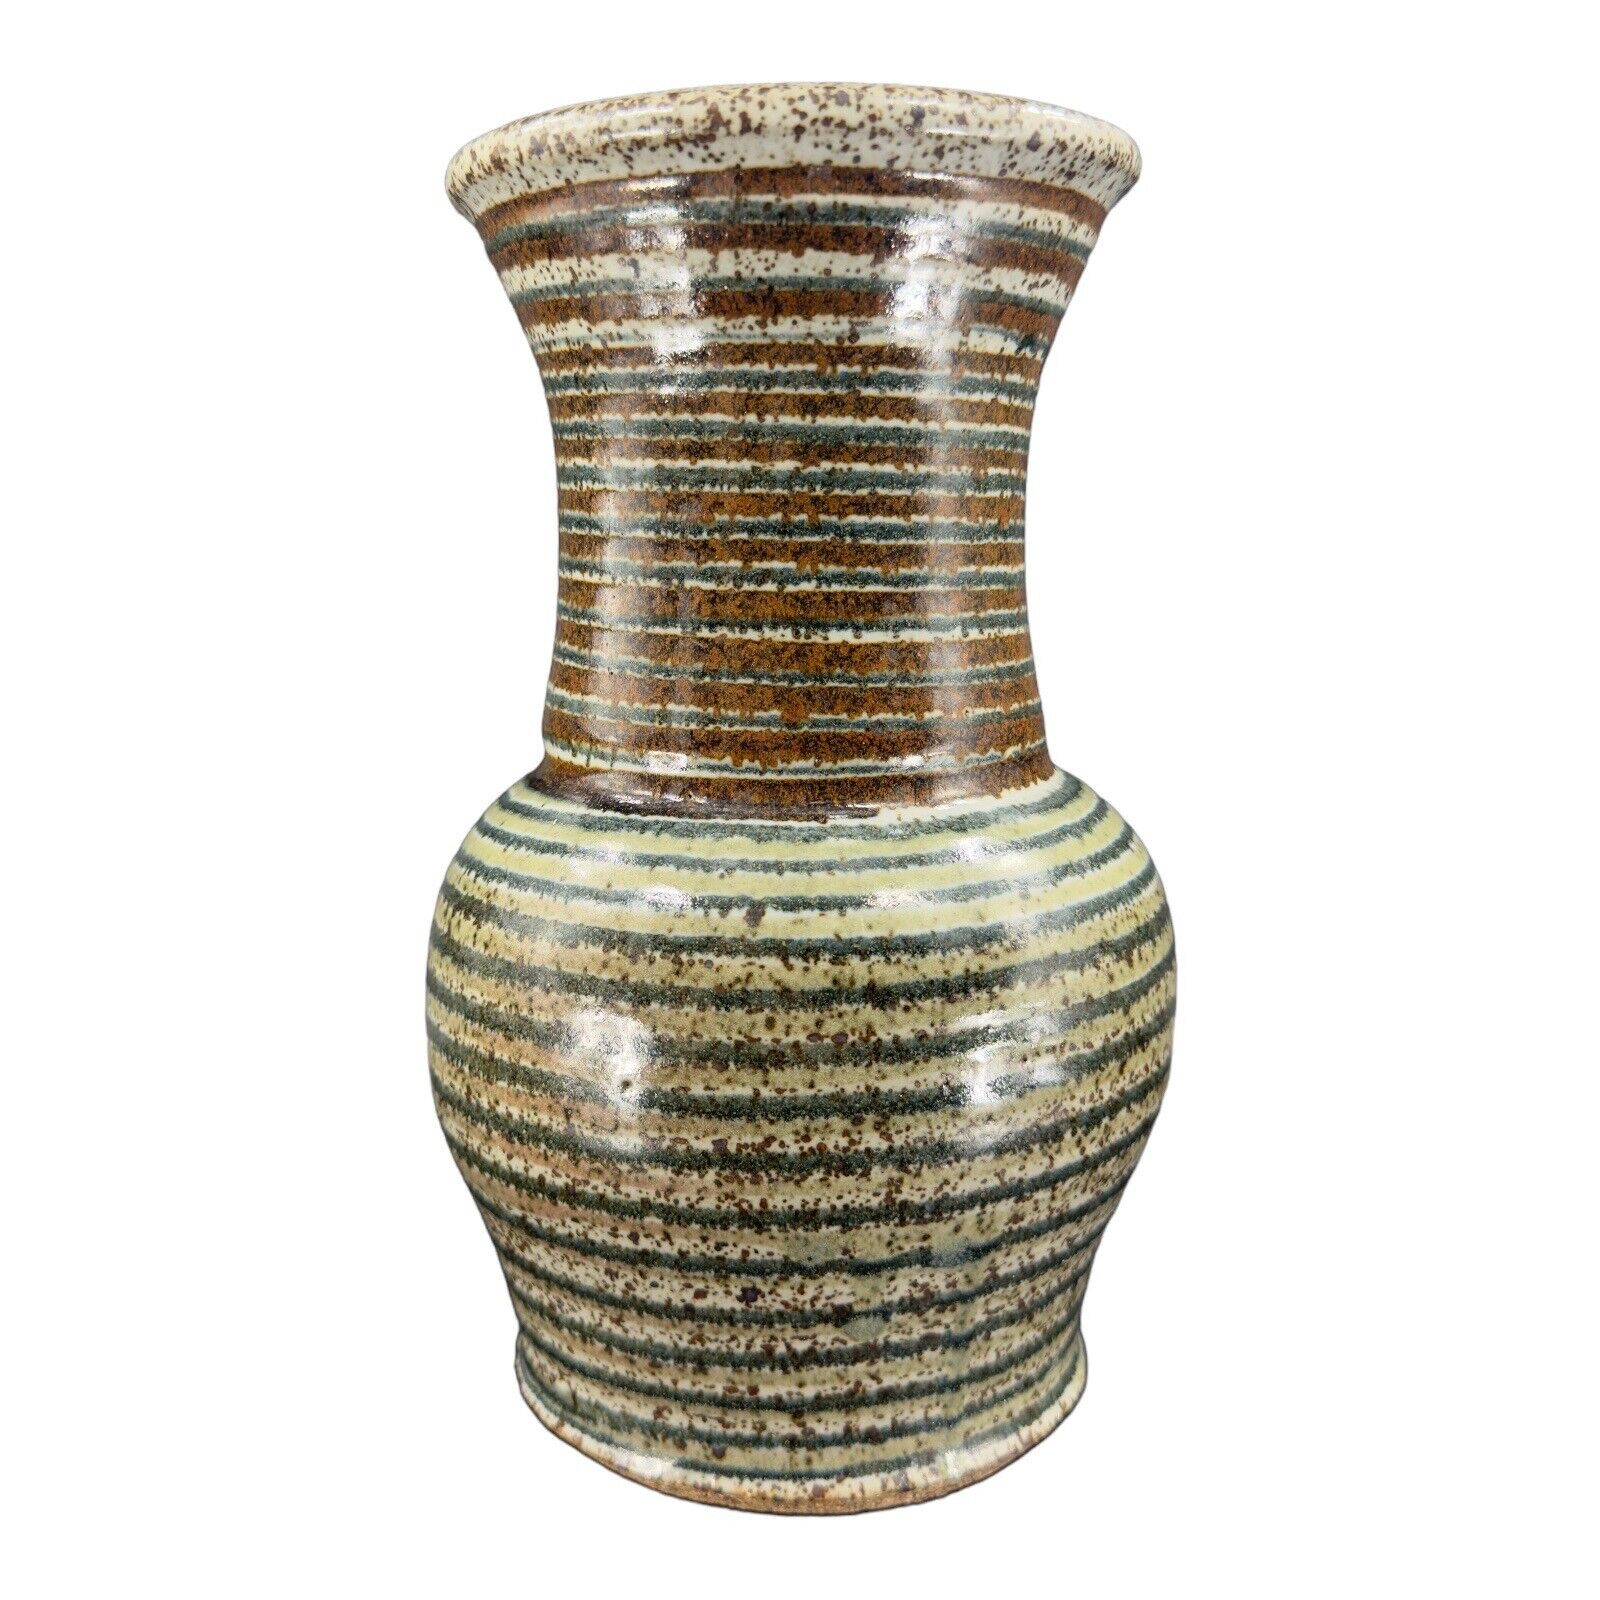 1981 Hand Made Stoneware Pottery Vase Vessel Artist Signed Ranesl Brown Speckled